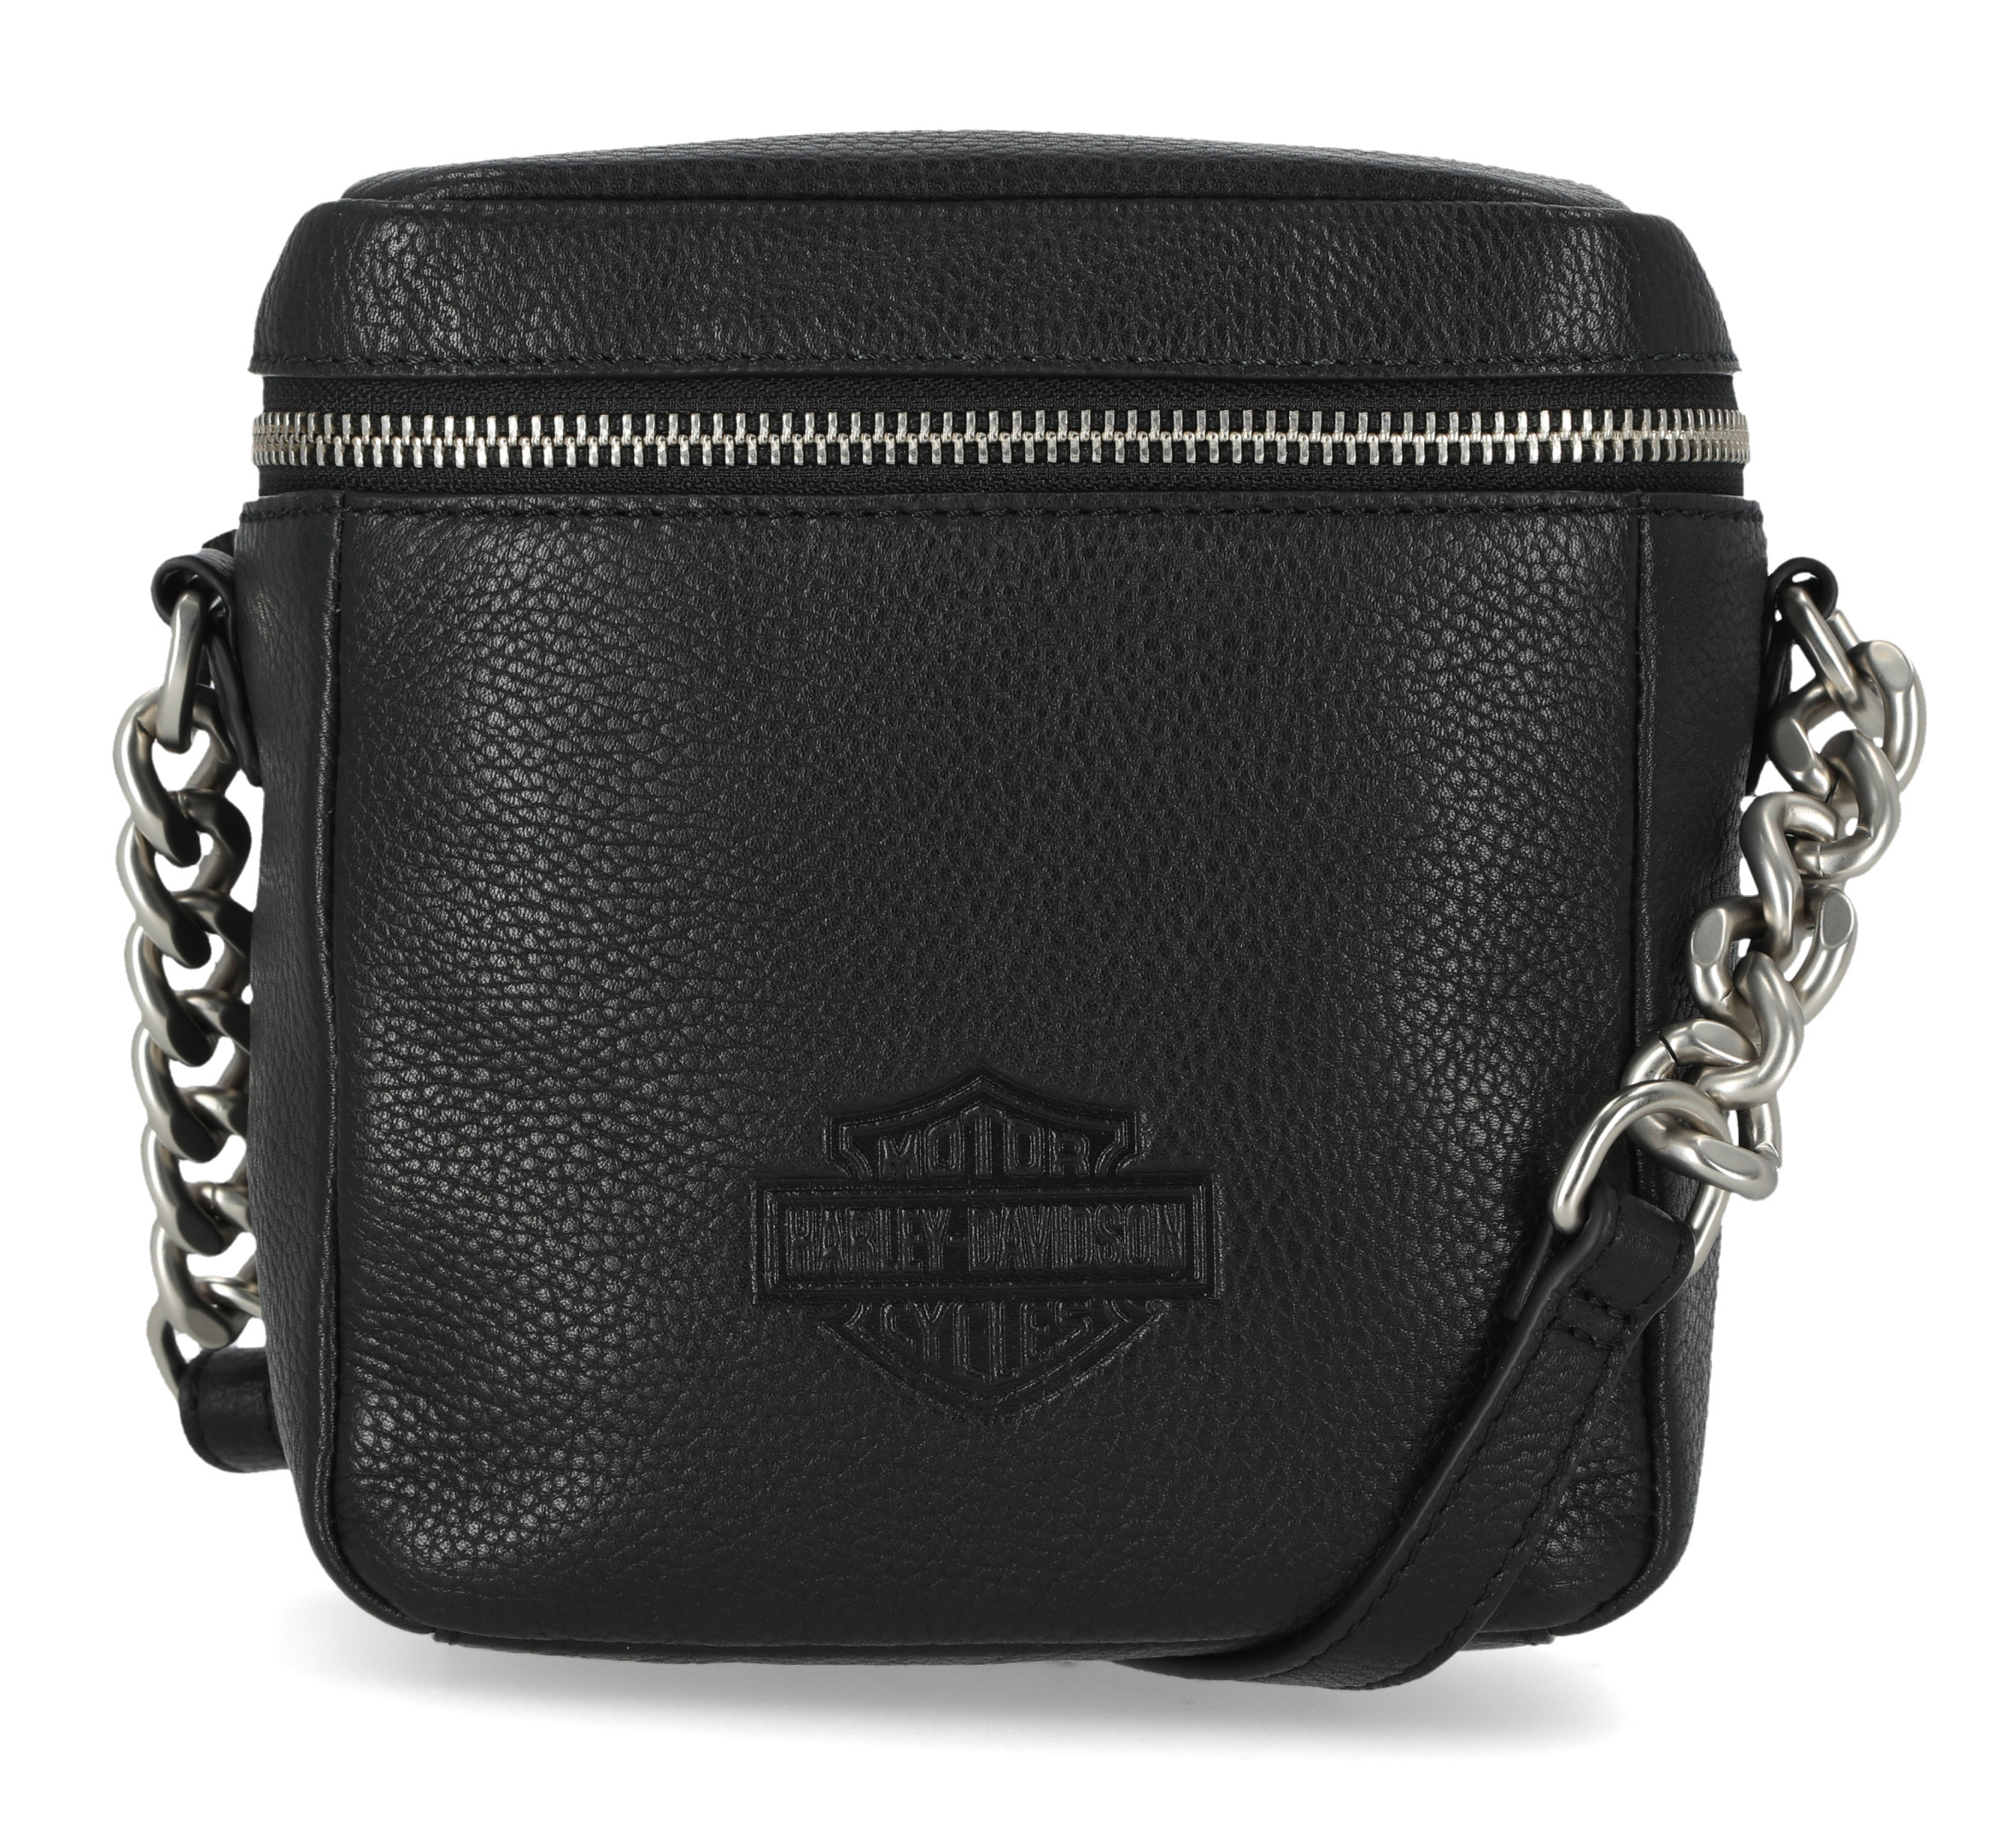 Harley-Davidson Women's Iconic Bar & Shield Chain Crossbody Bag, Black